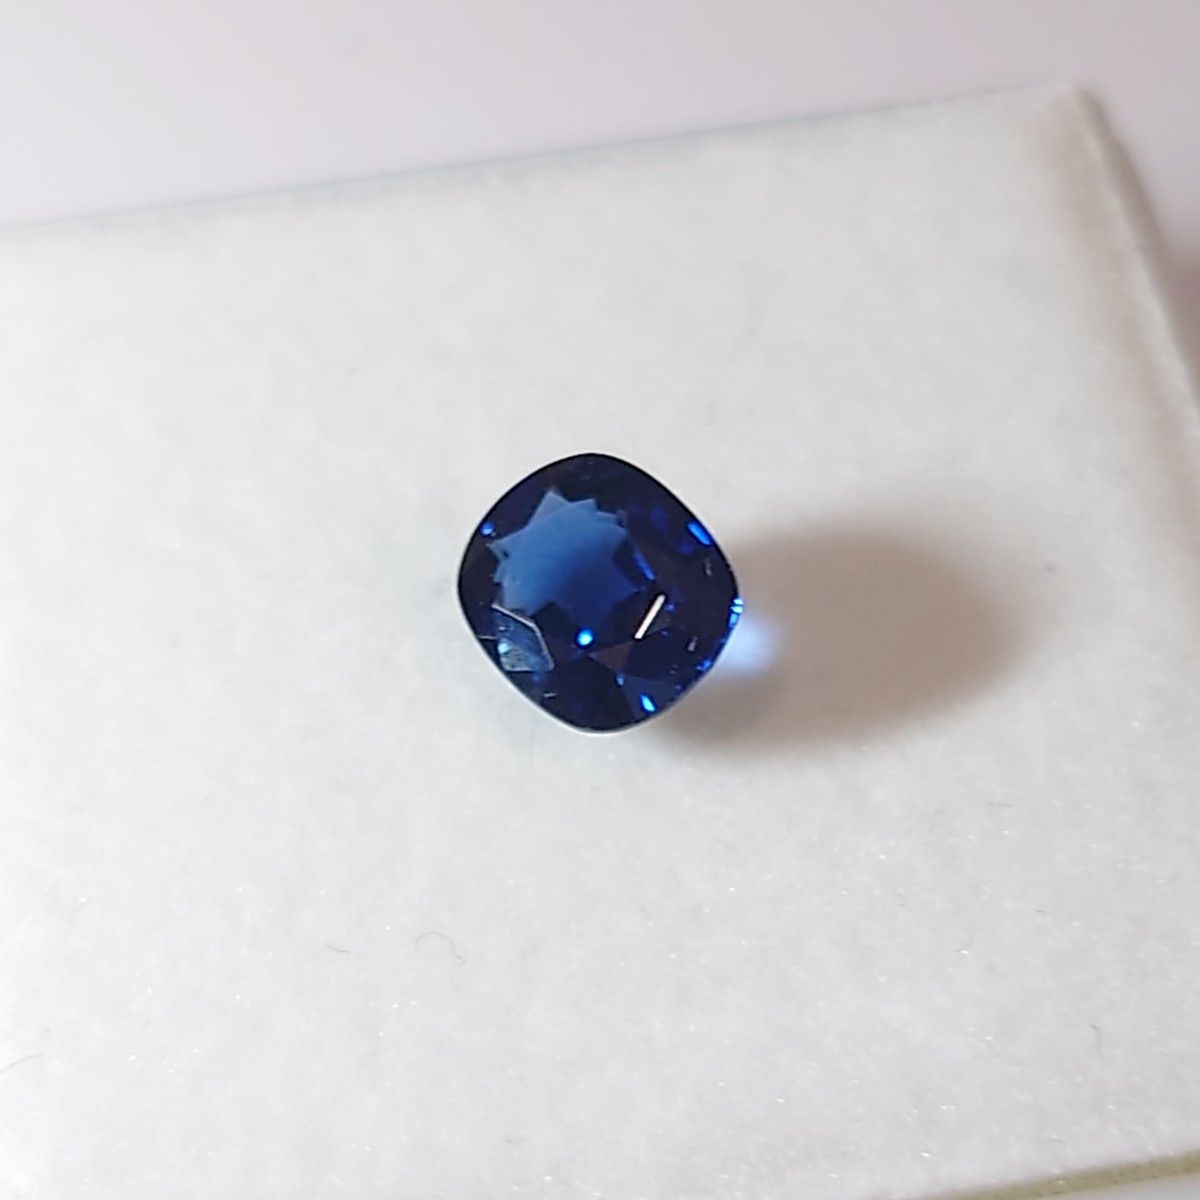 【48】1.5ct 超美品 サファイア 宝石 天然石 ルース